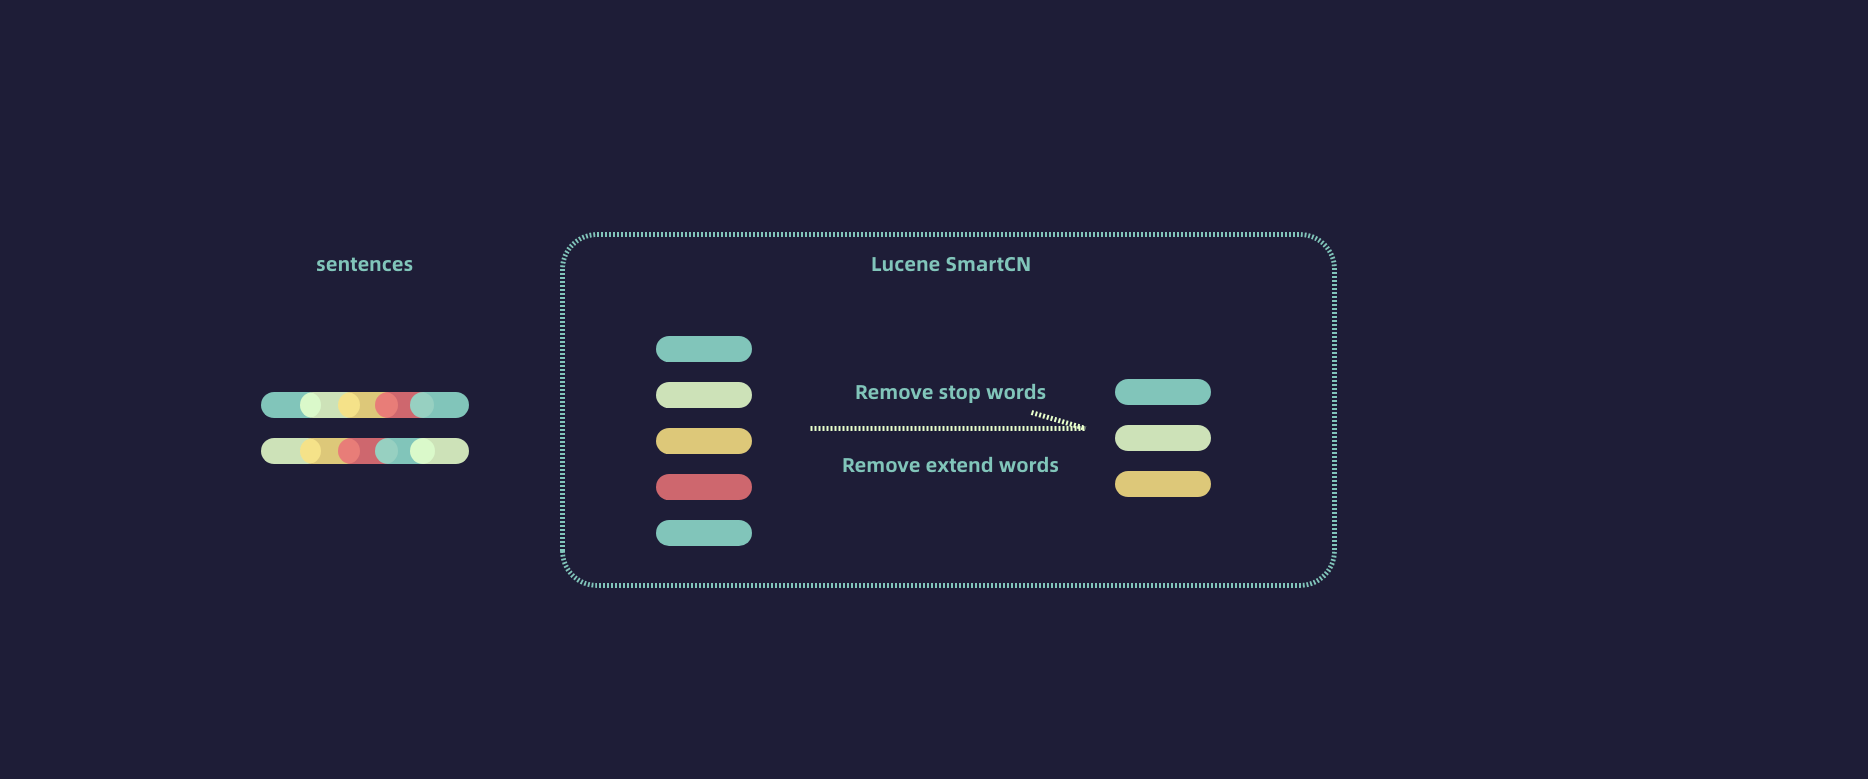 Lucene的Smart CN实现分词、停用词、扩展词